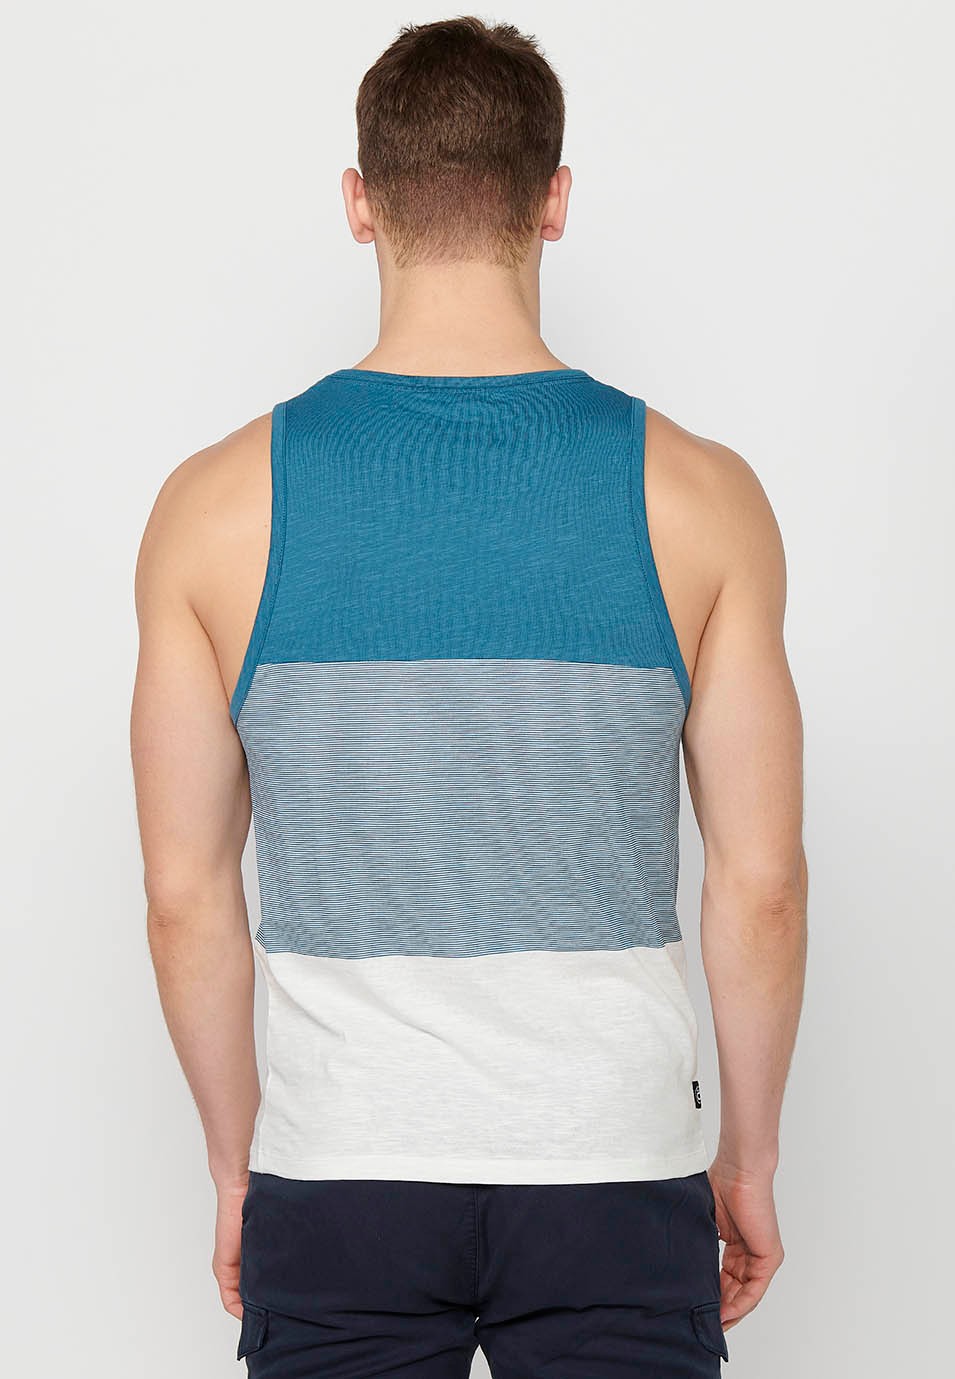 Tank top, multicolored blue striped print, for men